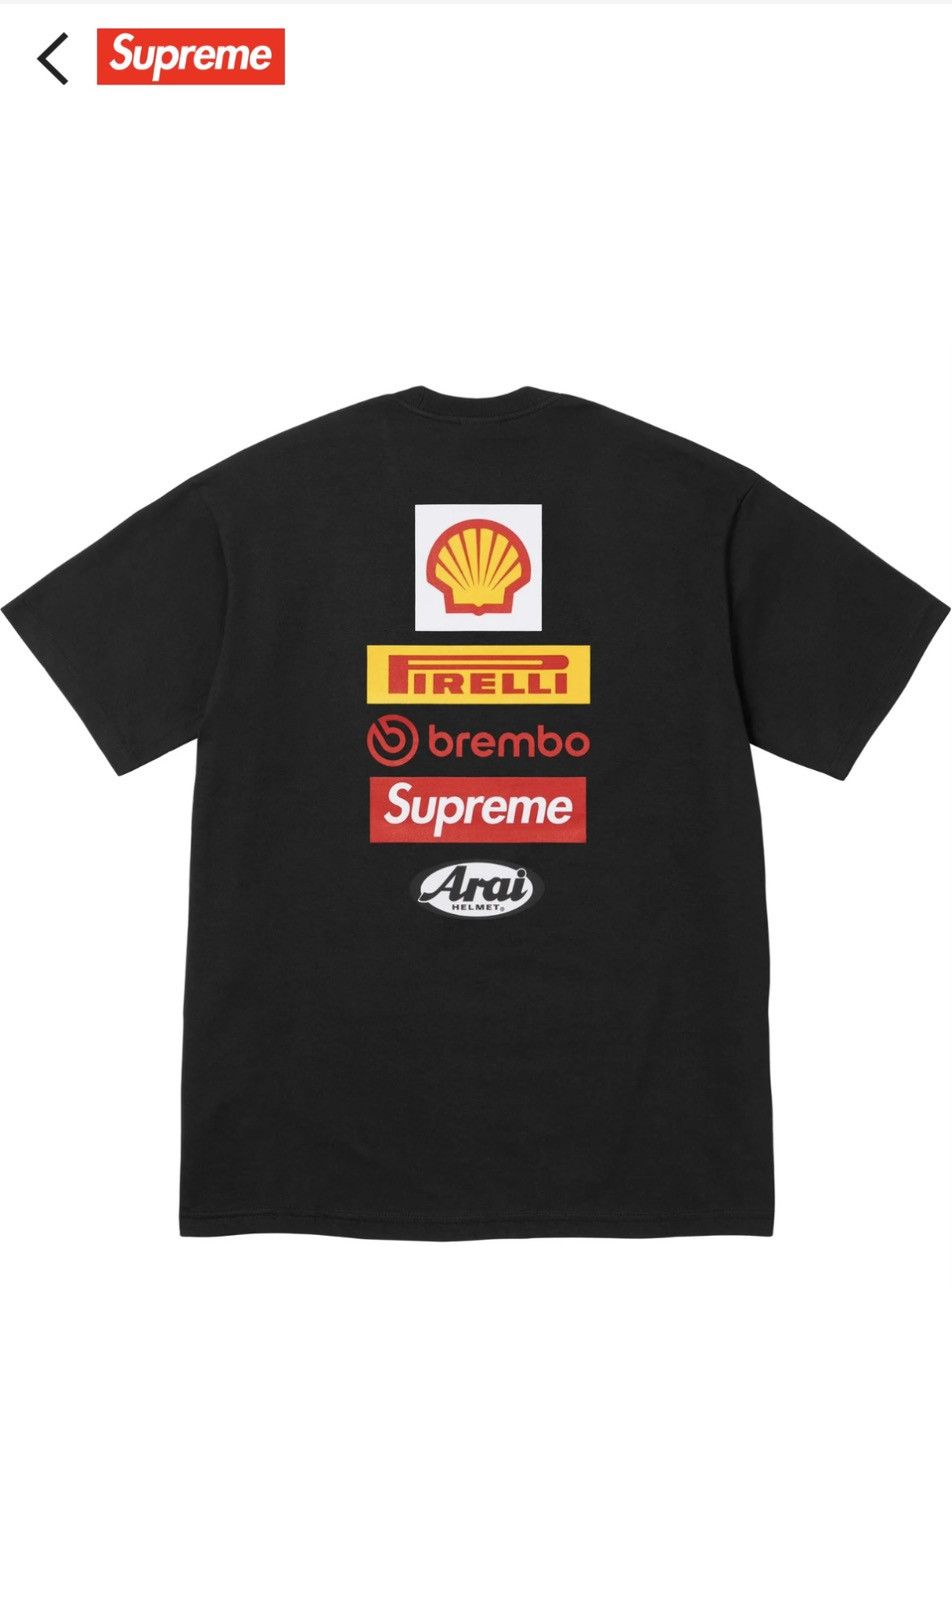 Supreme Supreme Ducati logos tee | Grailed